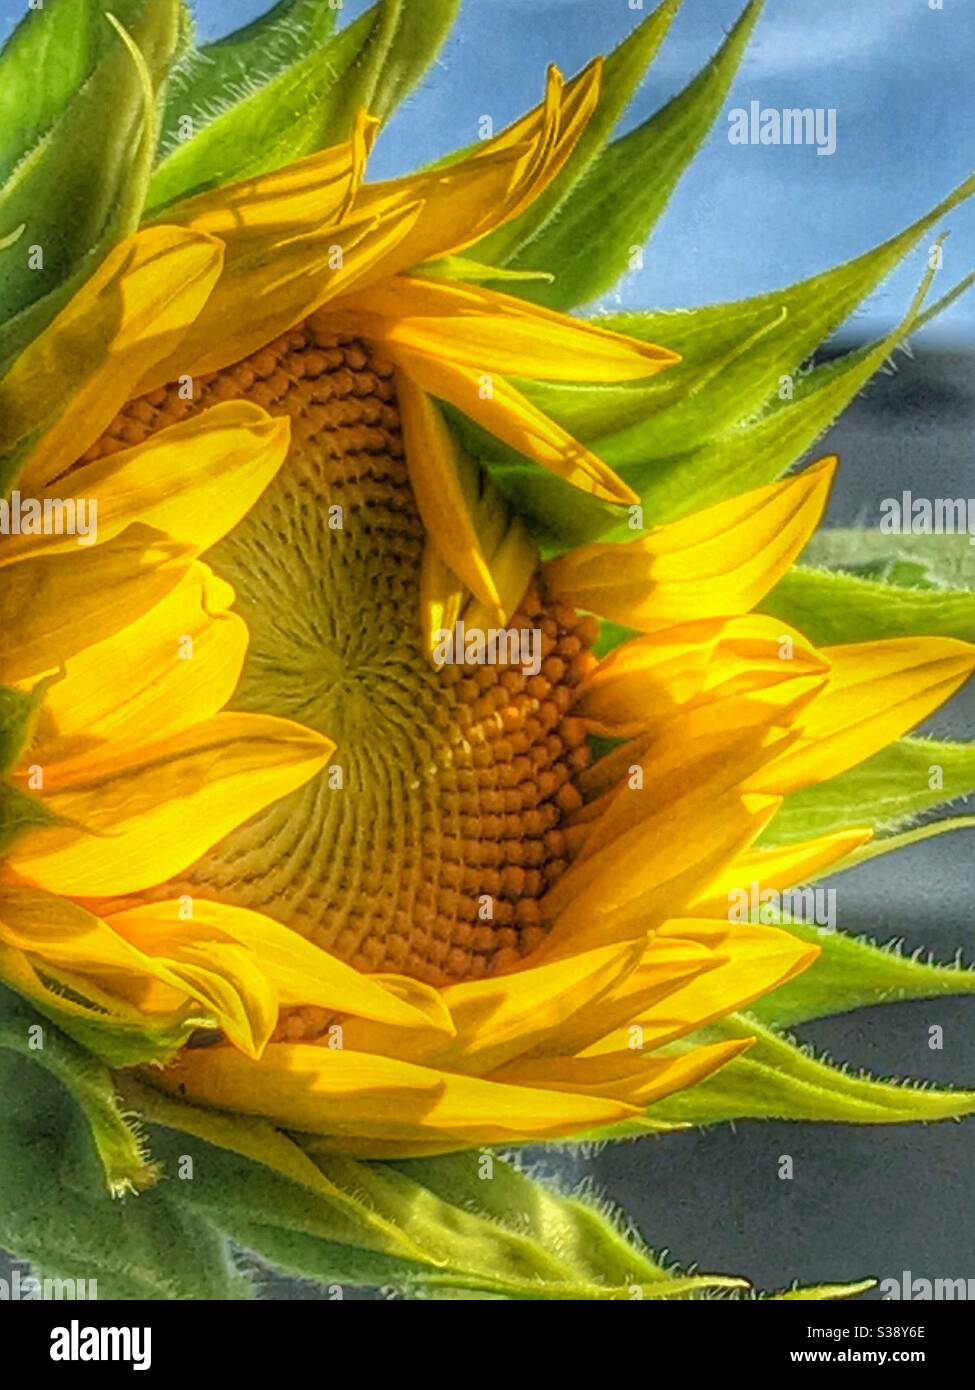 Sunflower opening in warm sunlight Stock Photo